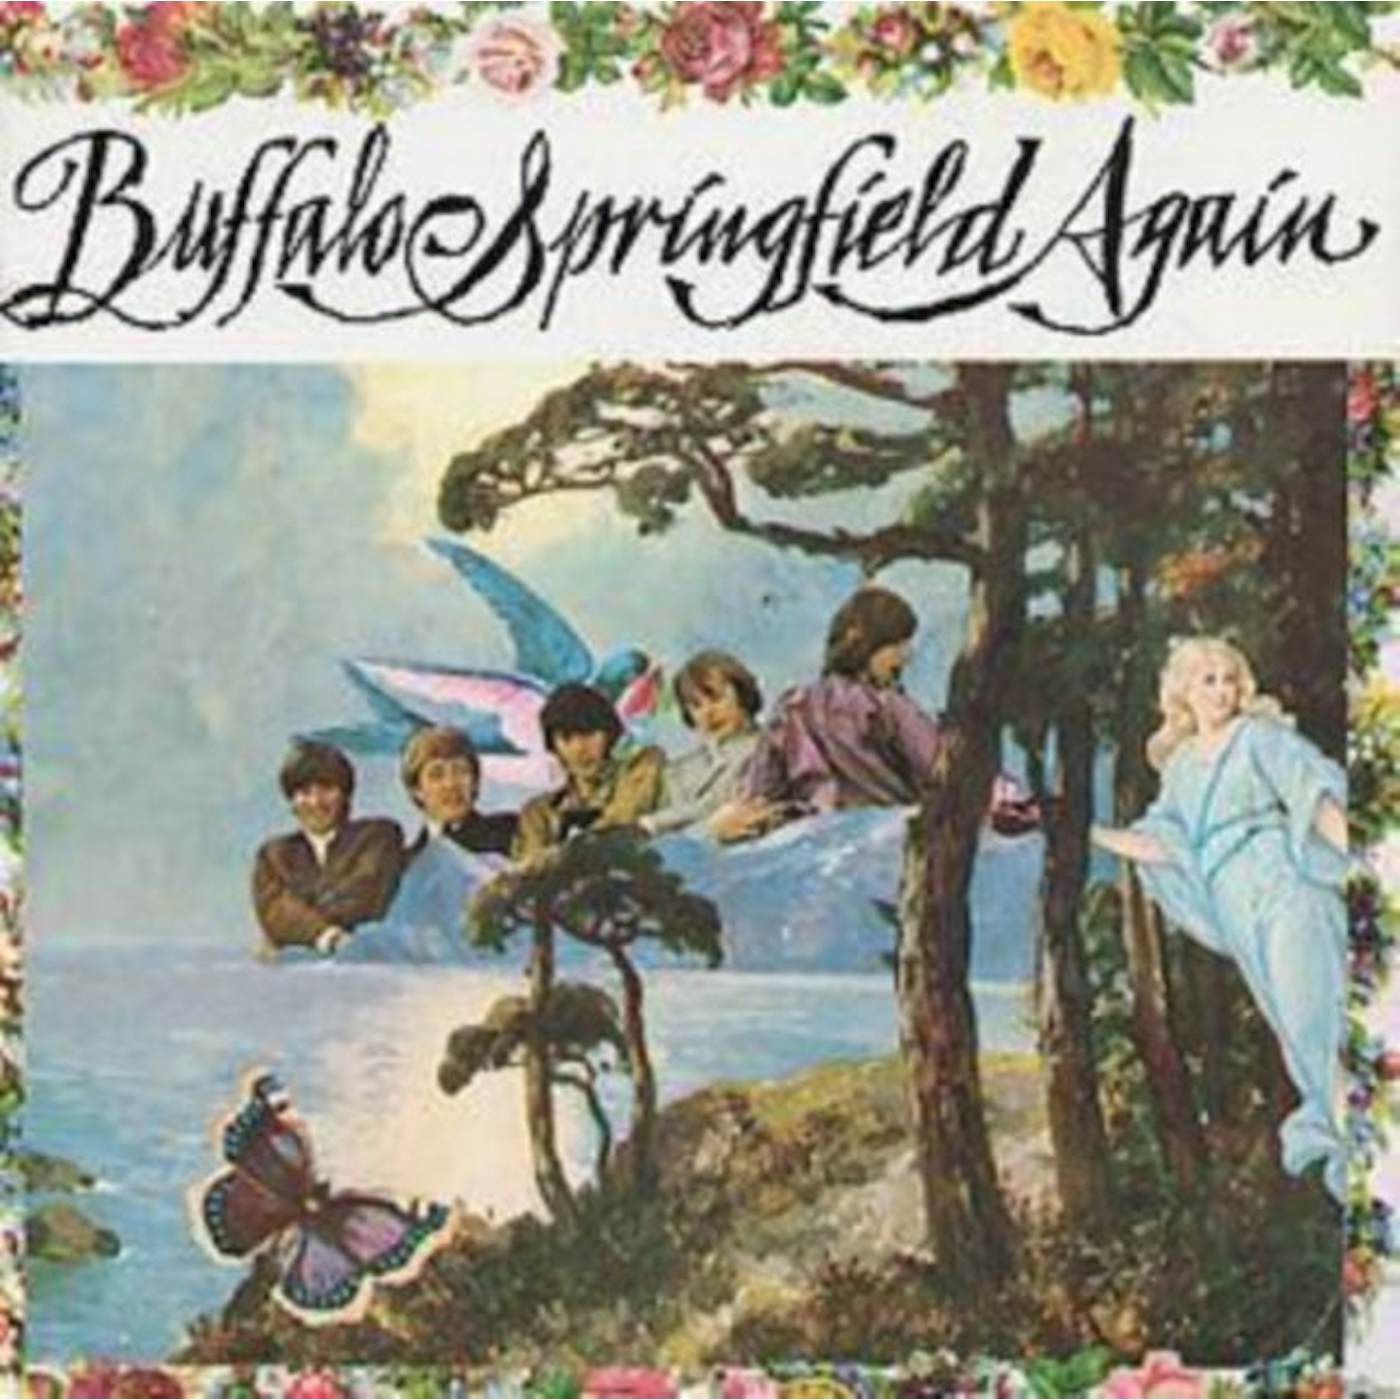 Buffalo Springfield CD - Buffalo Springfield Again